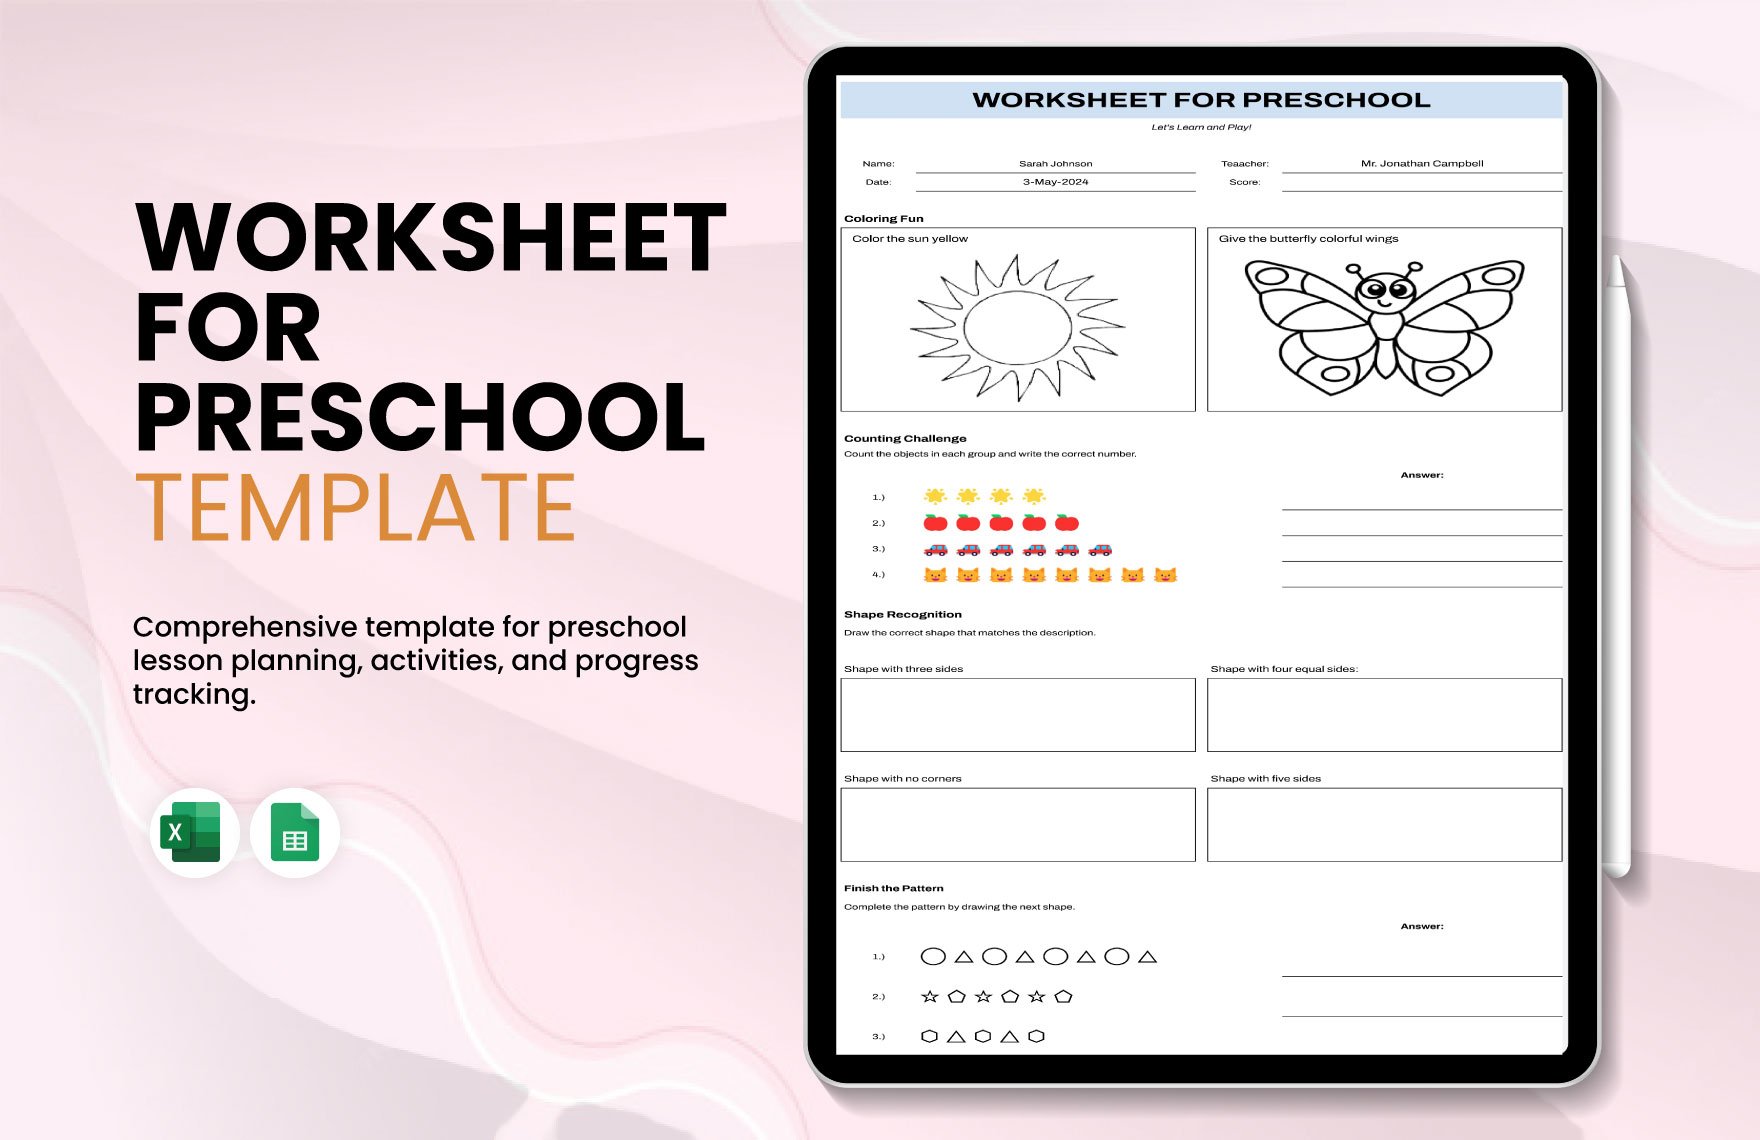 Worksheet For Preschool Template in Excel, Google Sheets